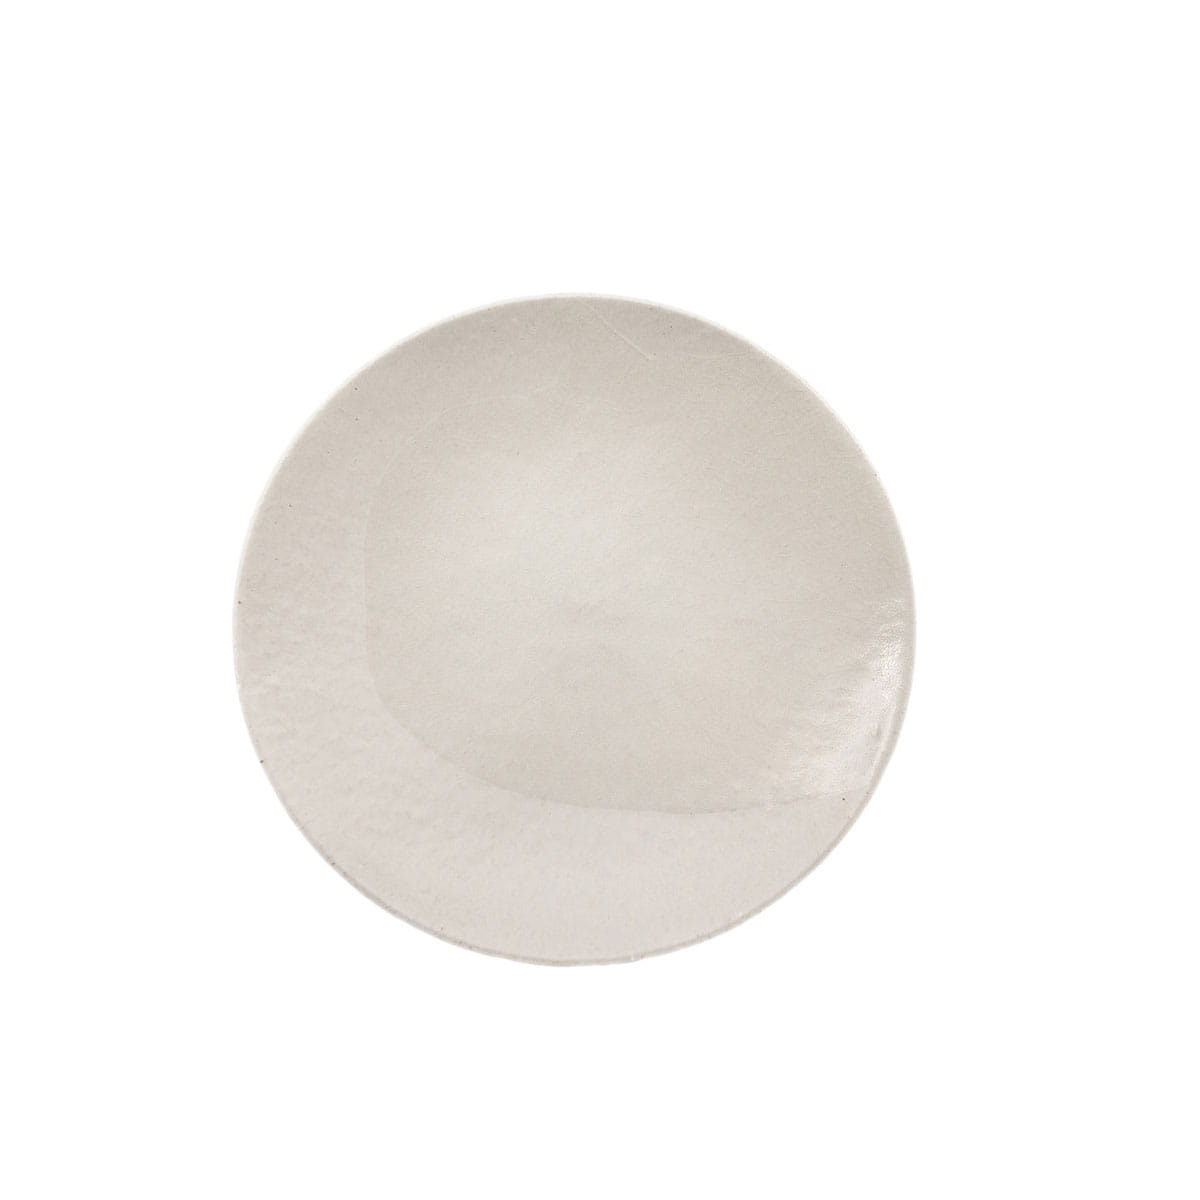 JARSWabi White Plate 잘스 와비 화이트 플레이트 (Ø27.7)MADE  IN  FRANCE